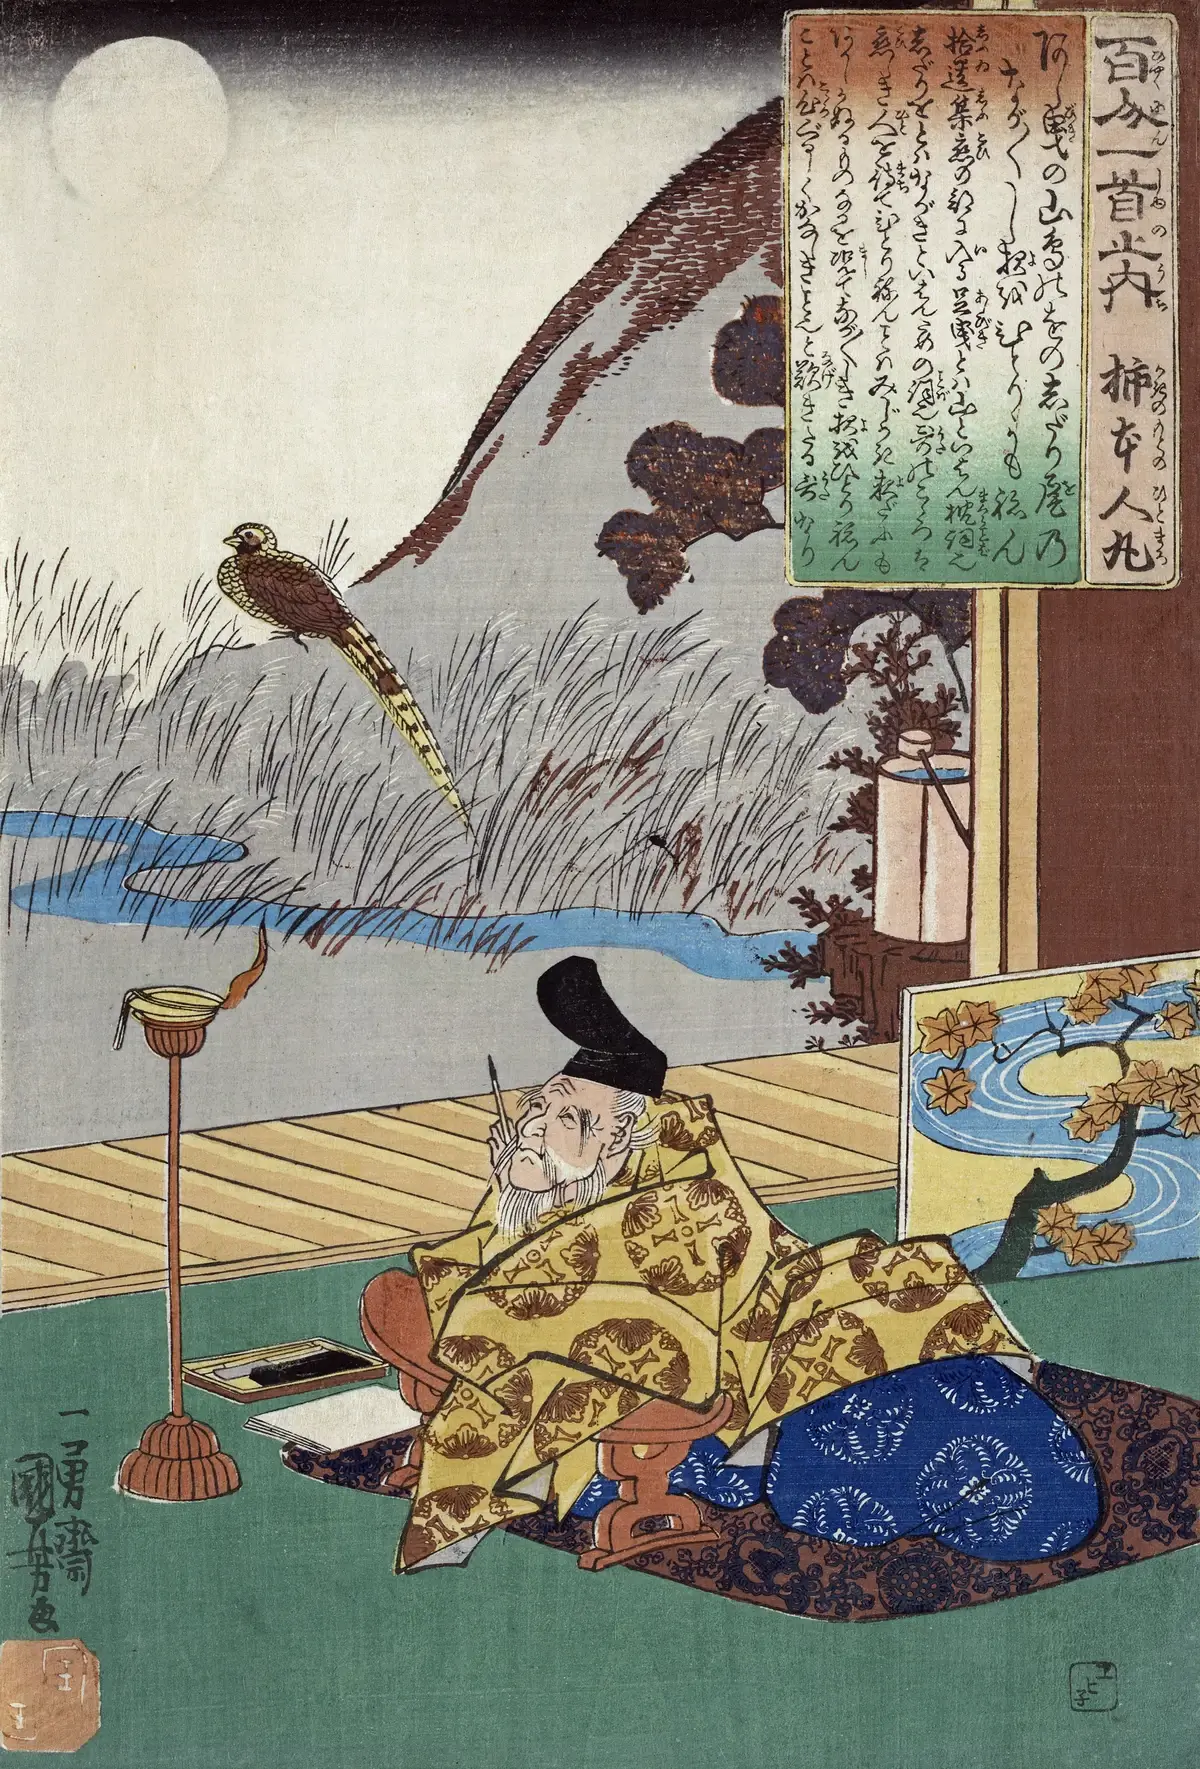 Utagawa Kuniyoshi, "Kakinomoto Hitomaro", between 1844 and 1854